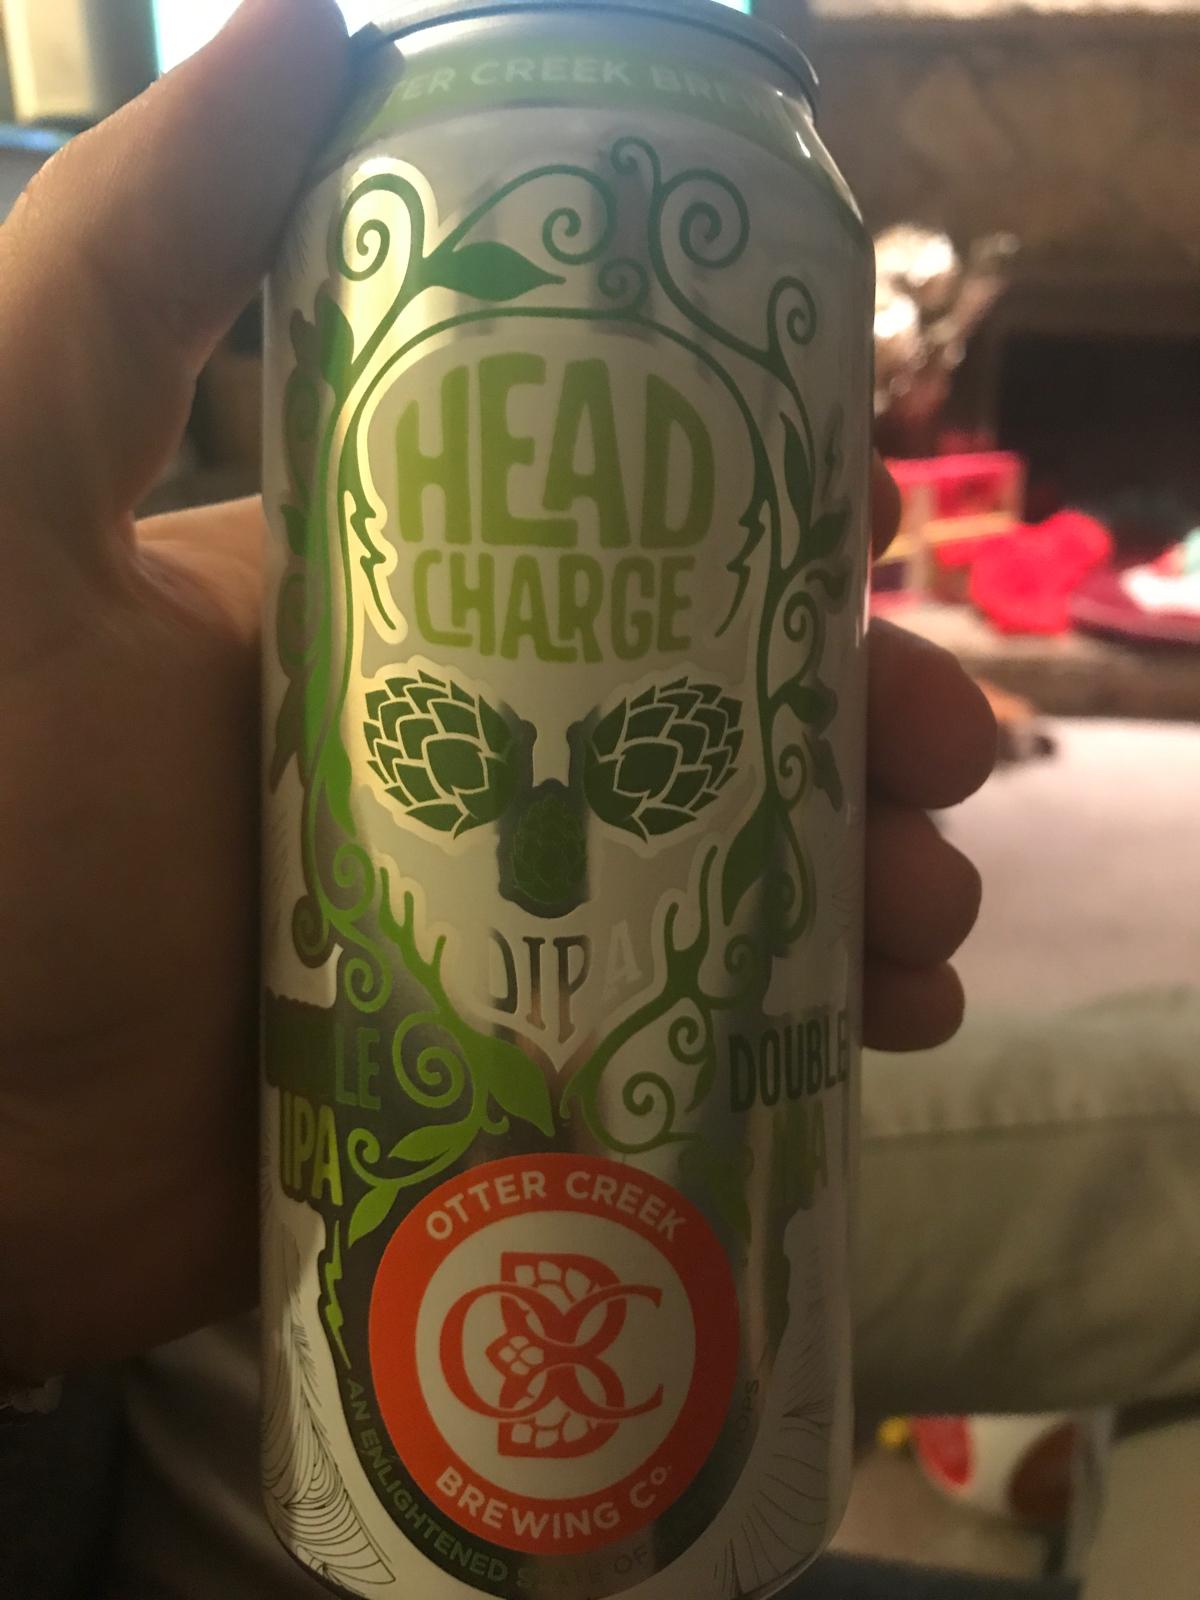 Head Charge